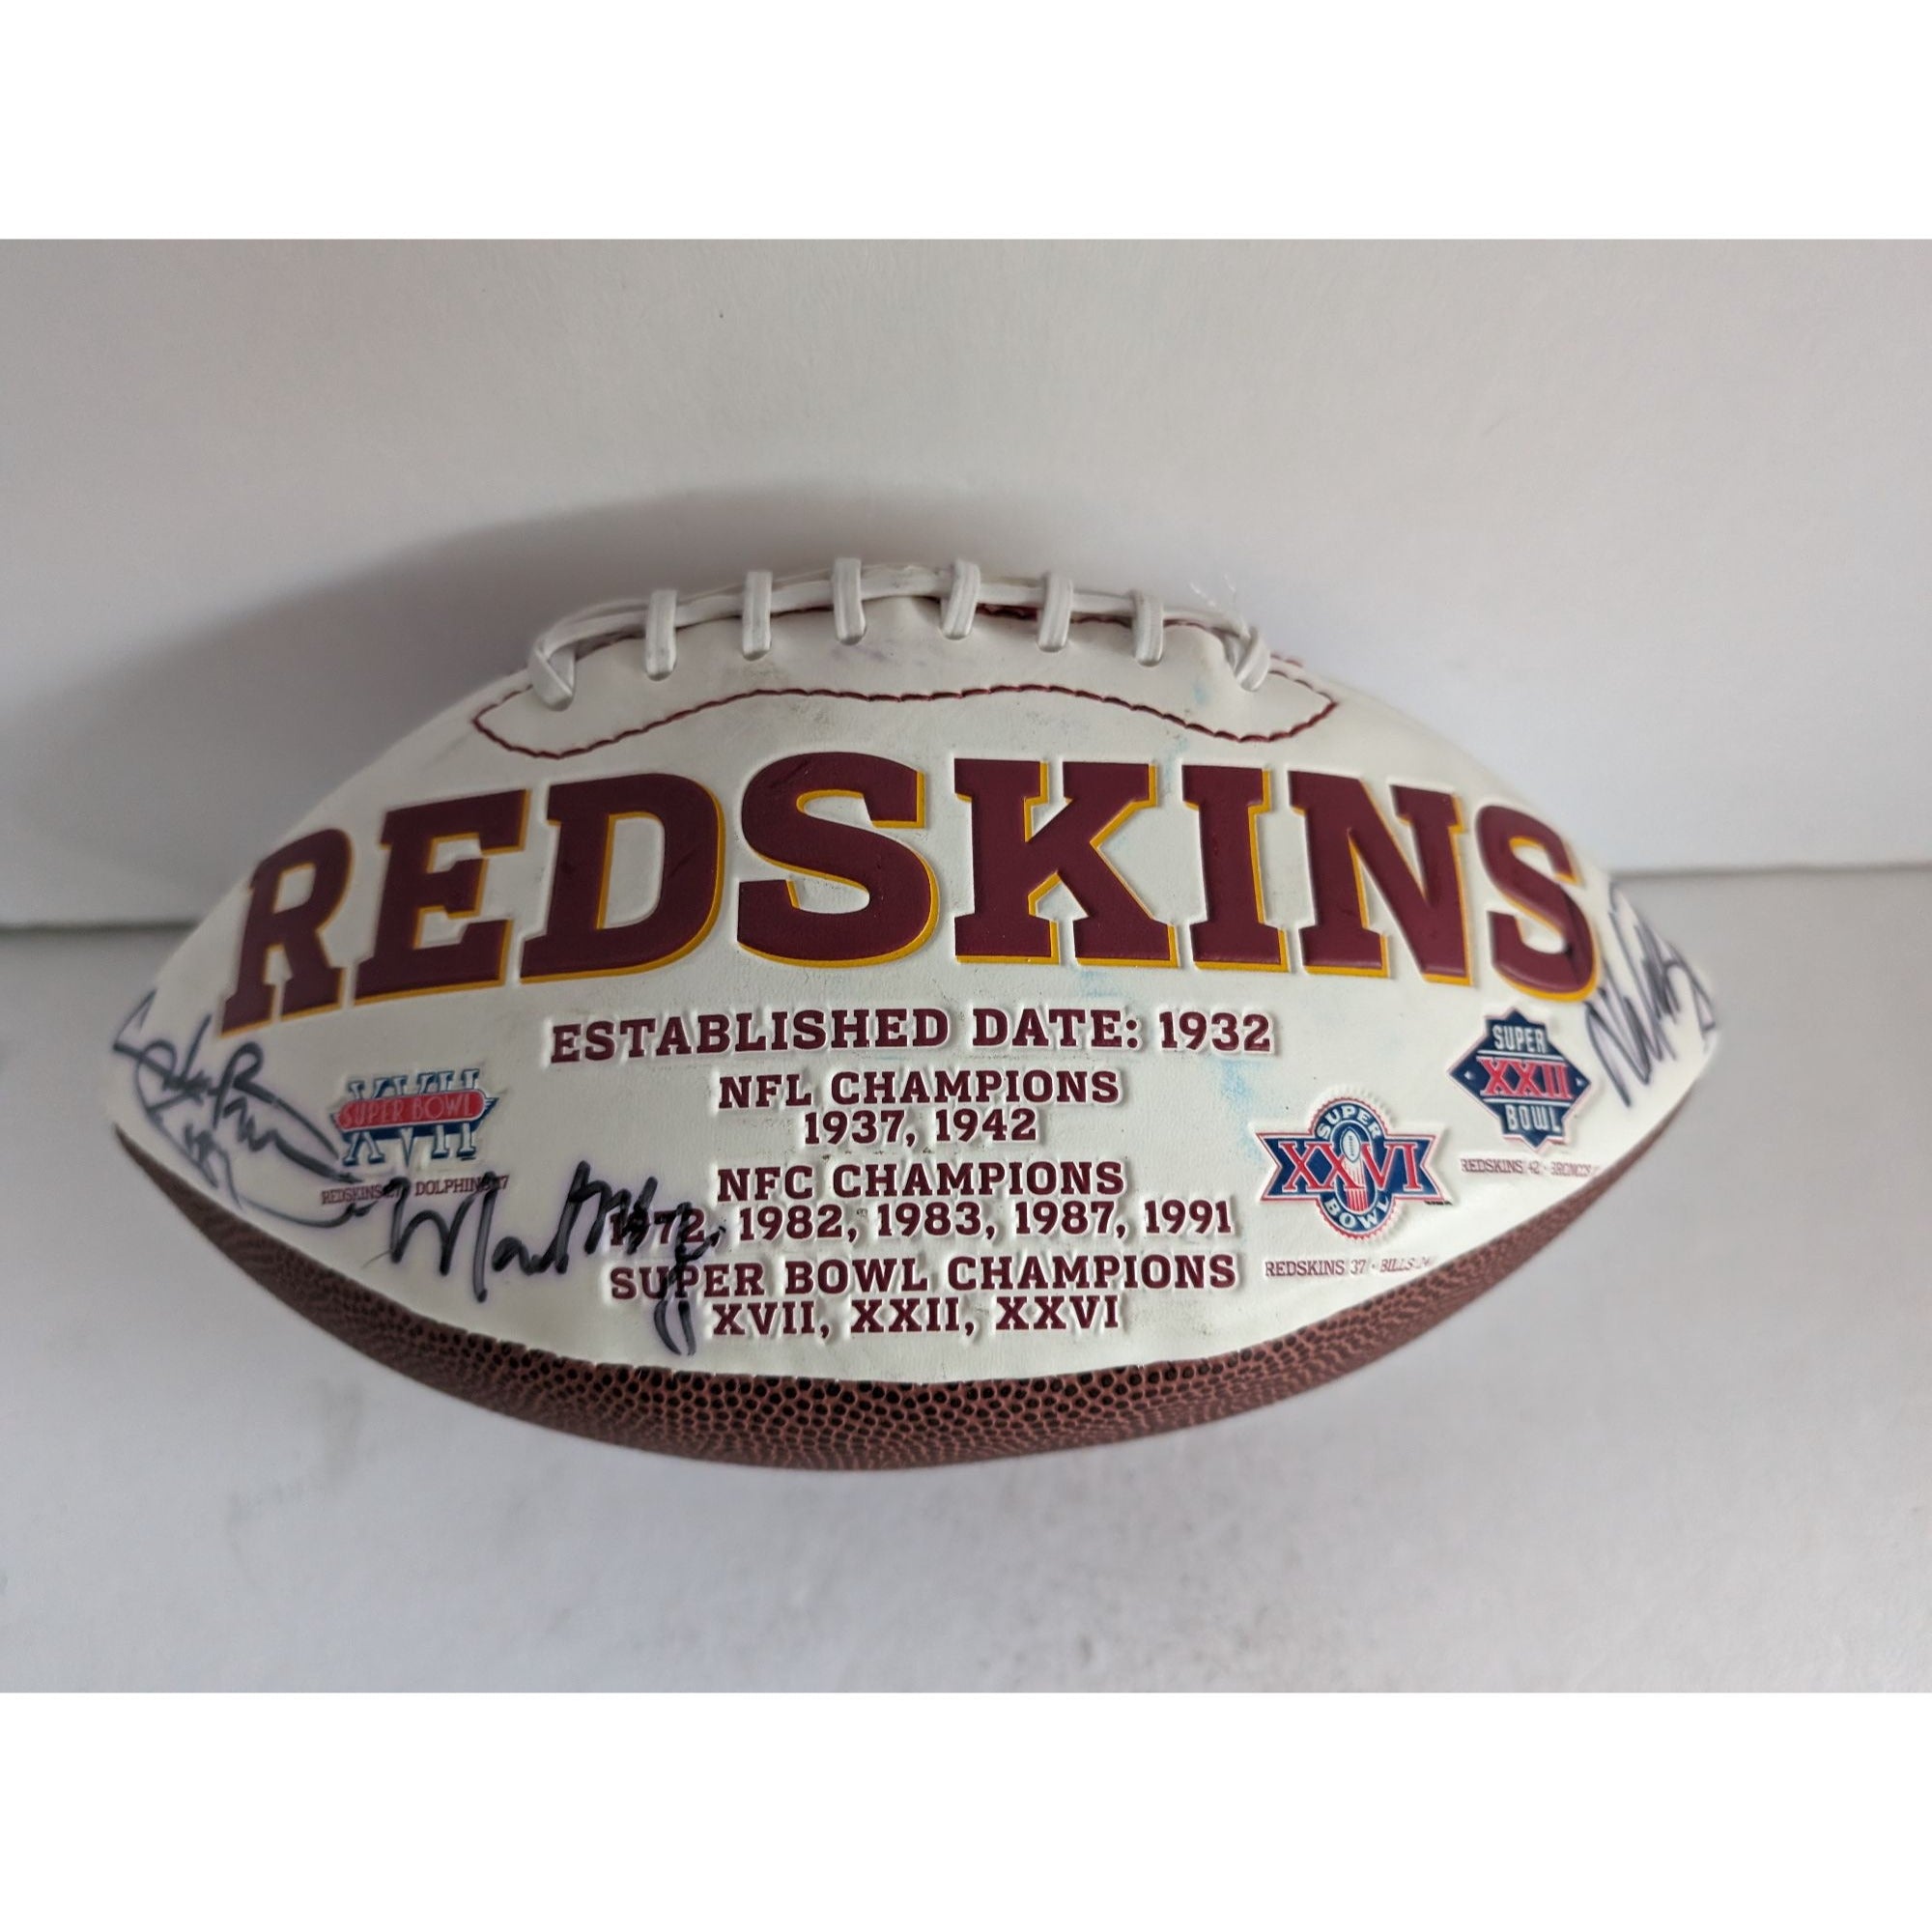 Washington Redskins John Riggins Doug Williams Sam Huff Joe Gibbs Art Monk 22 all-time greats signed football